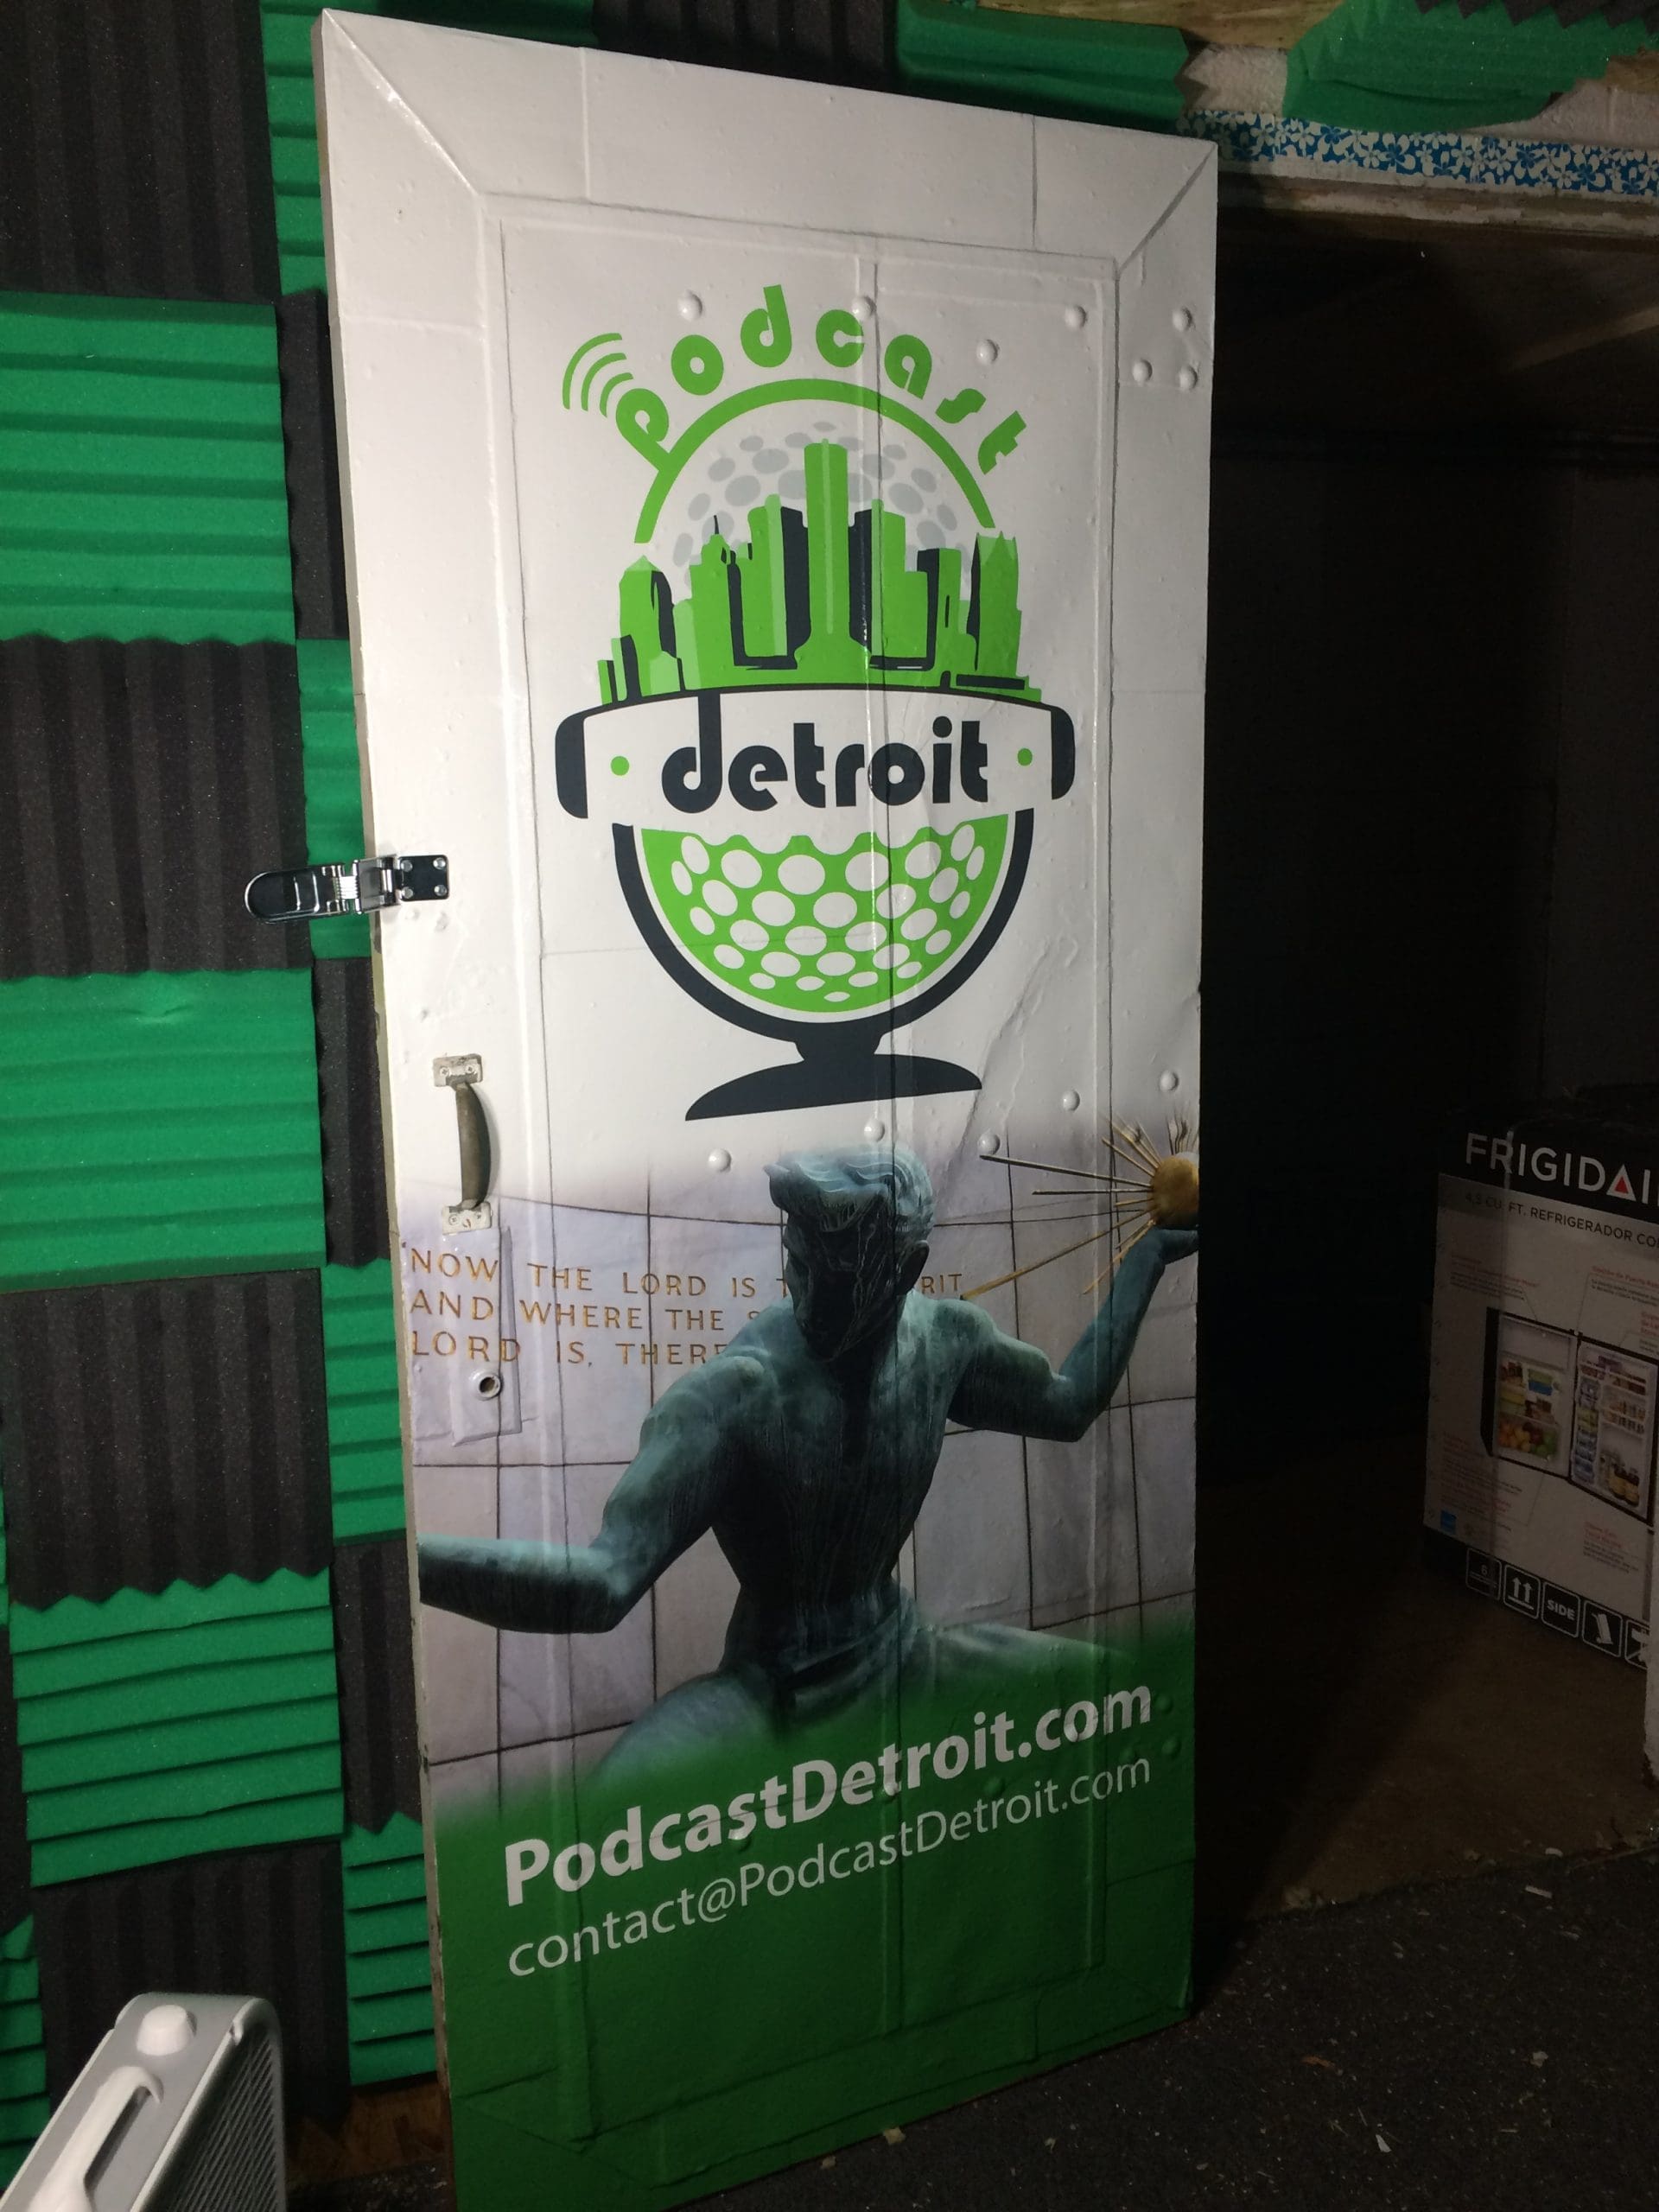 Podcast Detroit Door Wrap - after